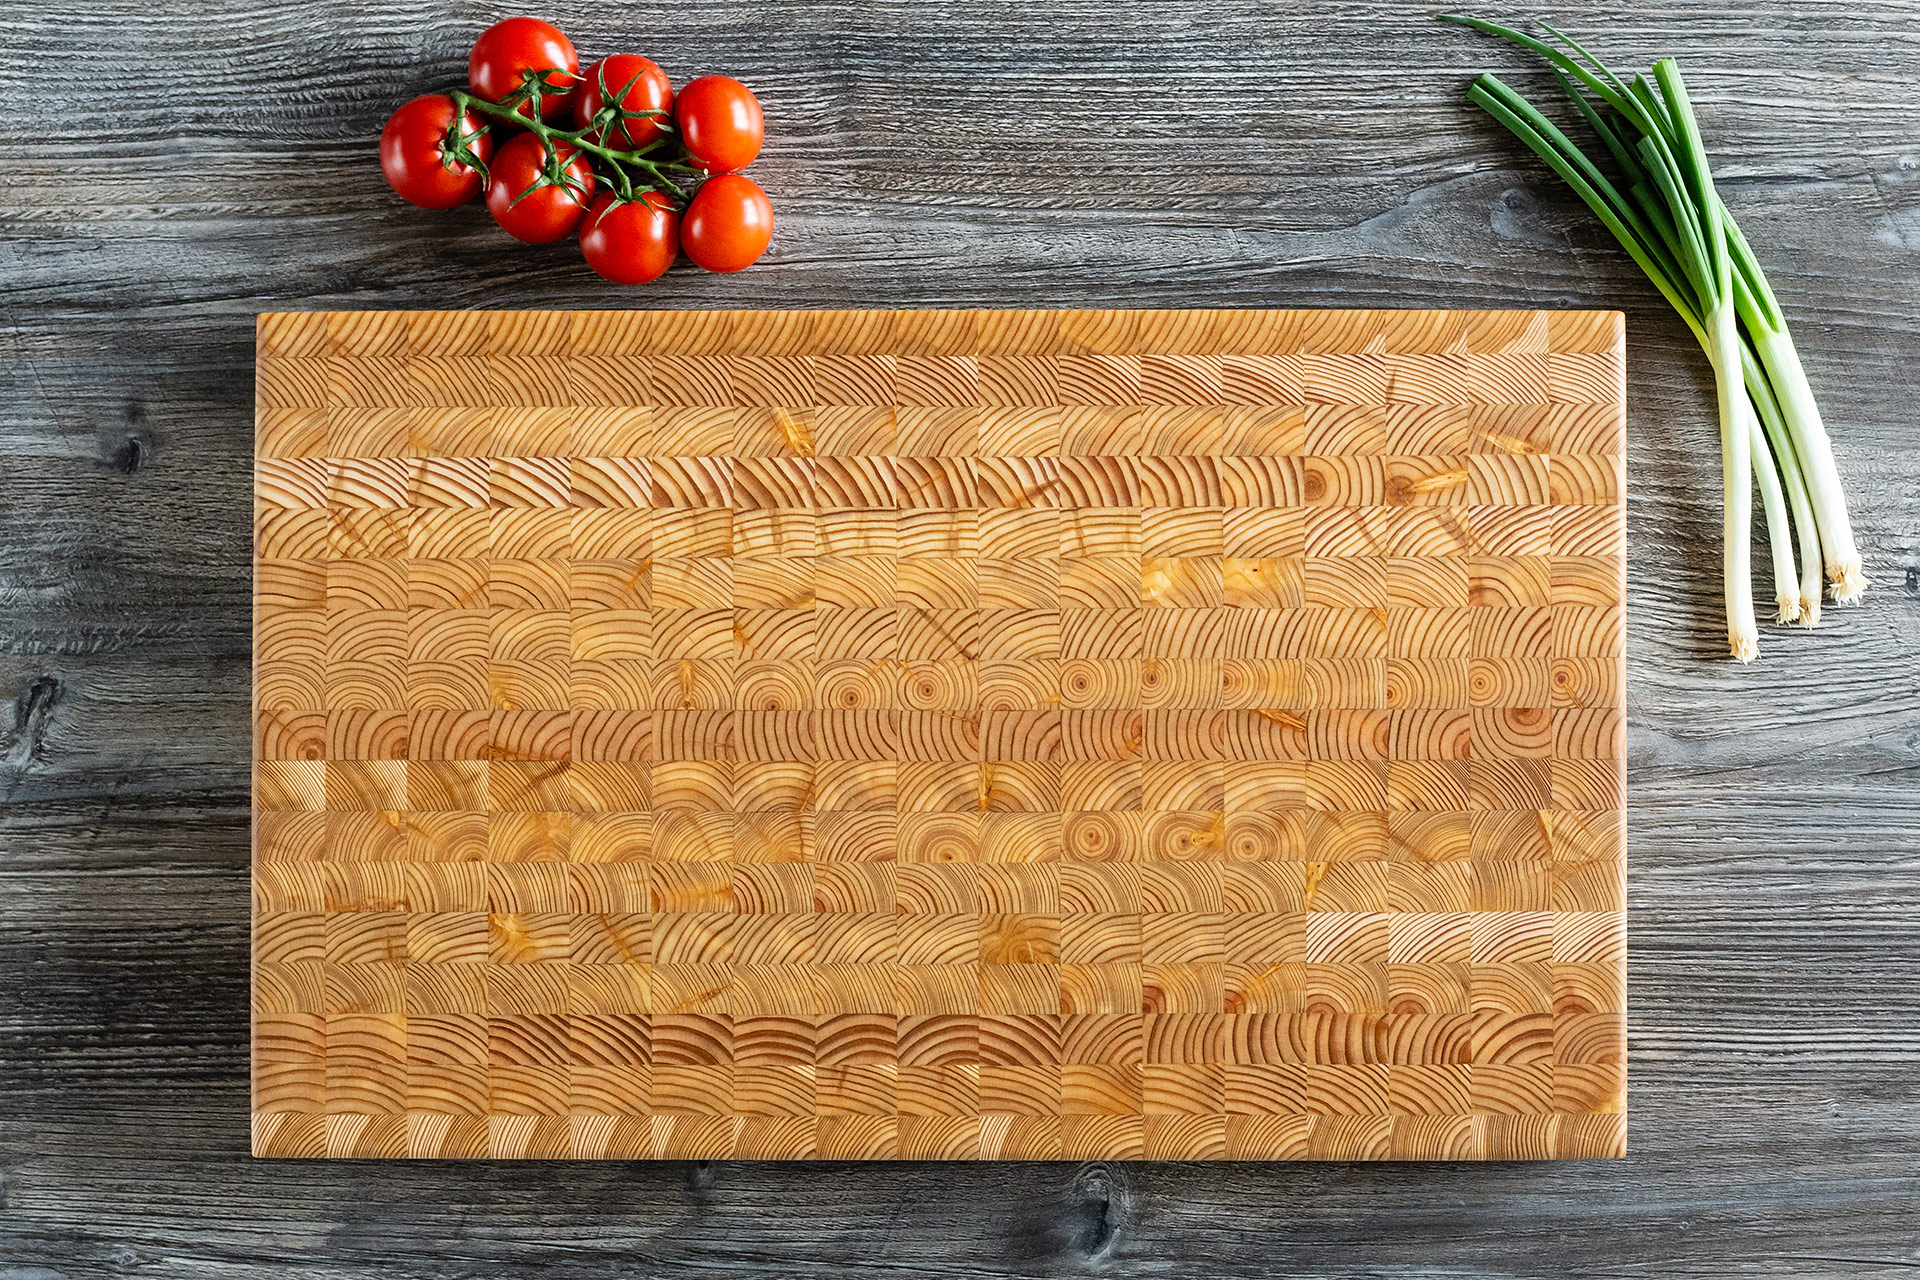 Large end-grain cutting board